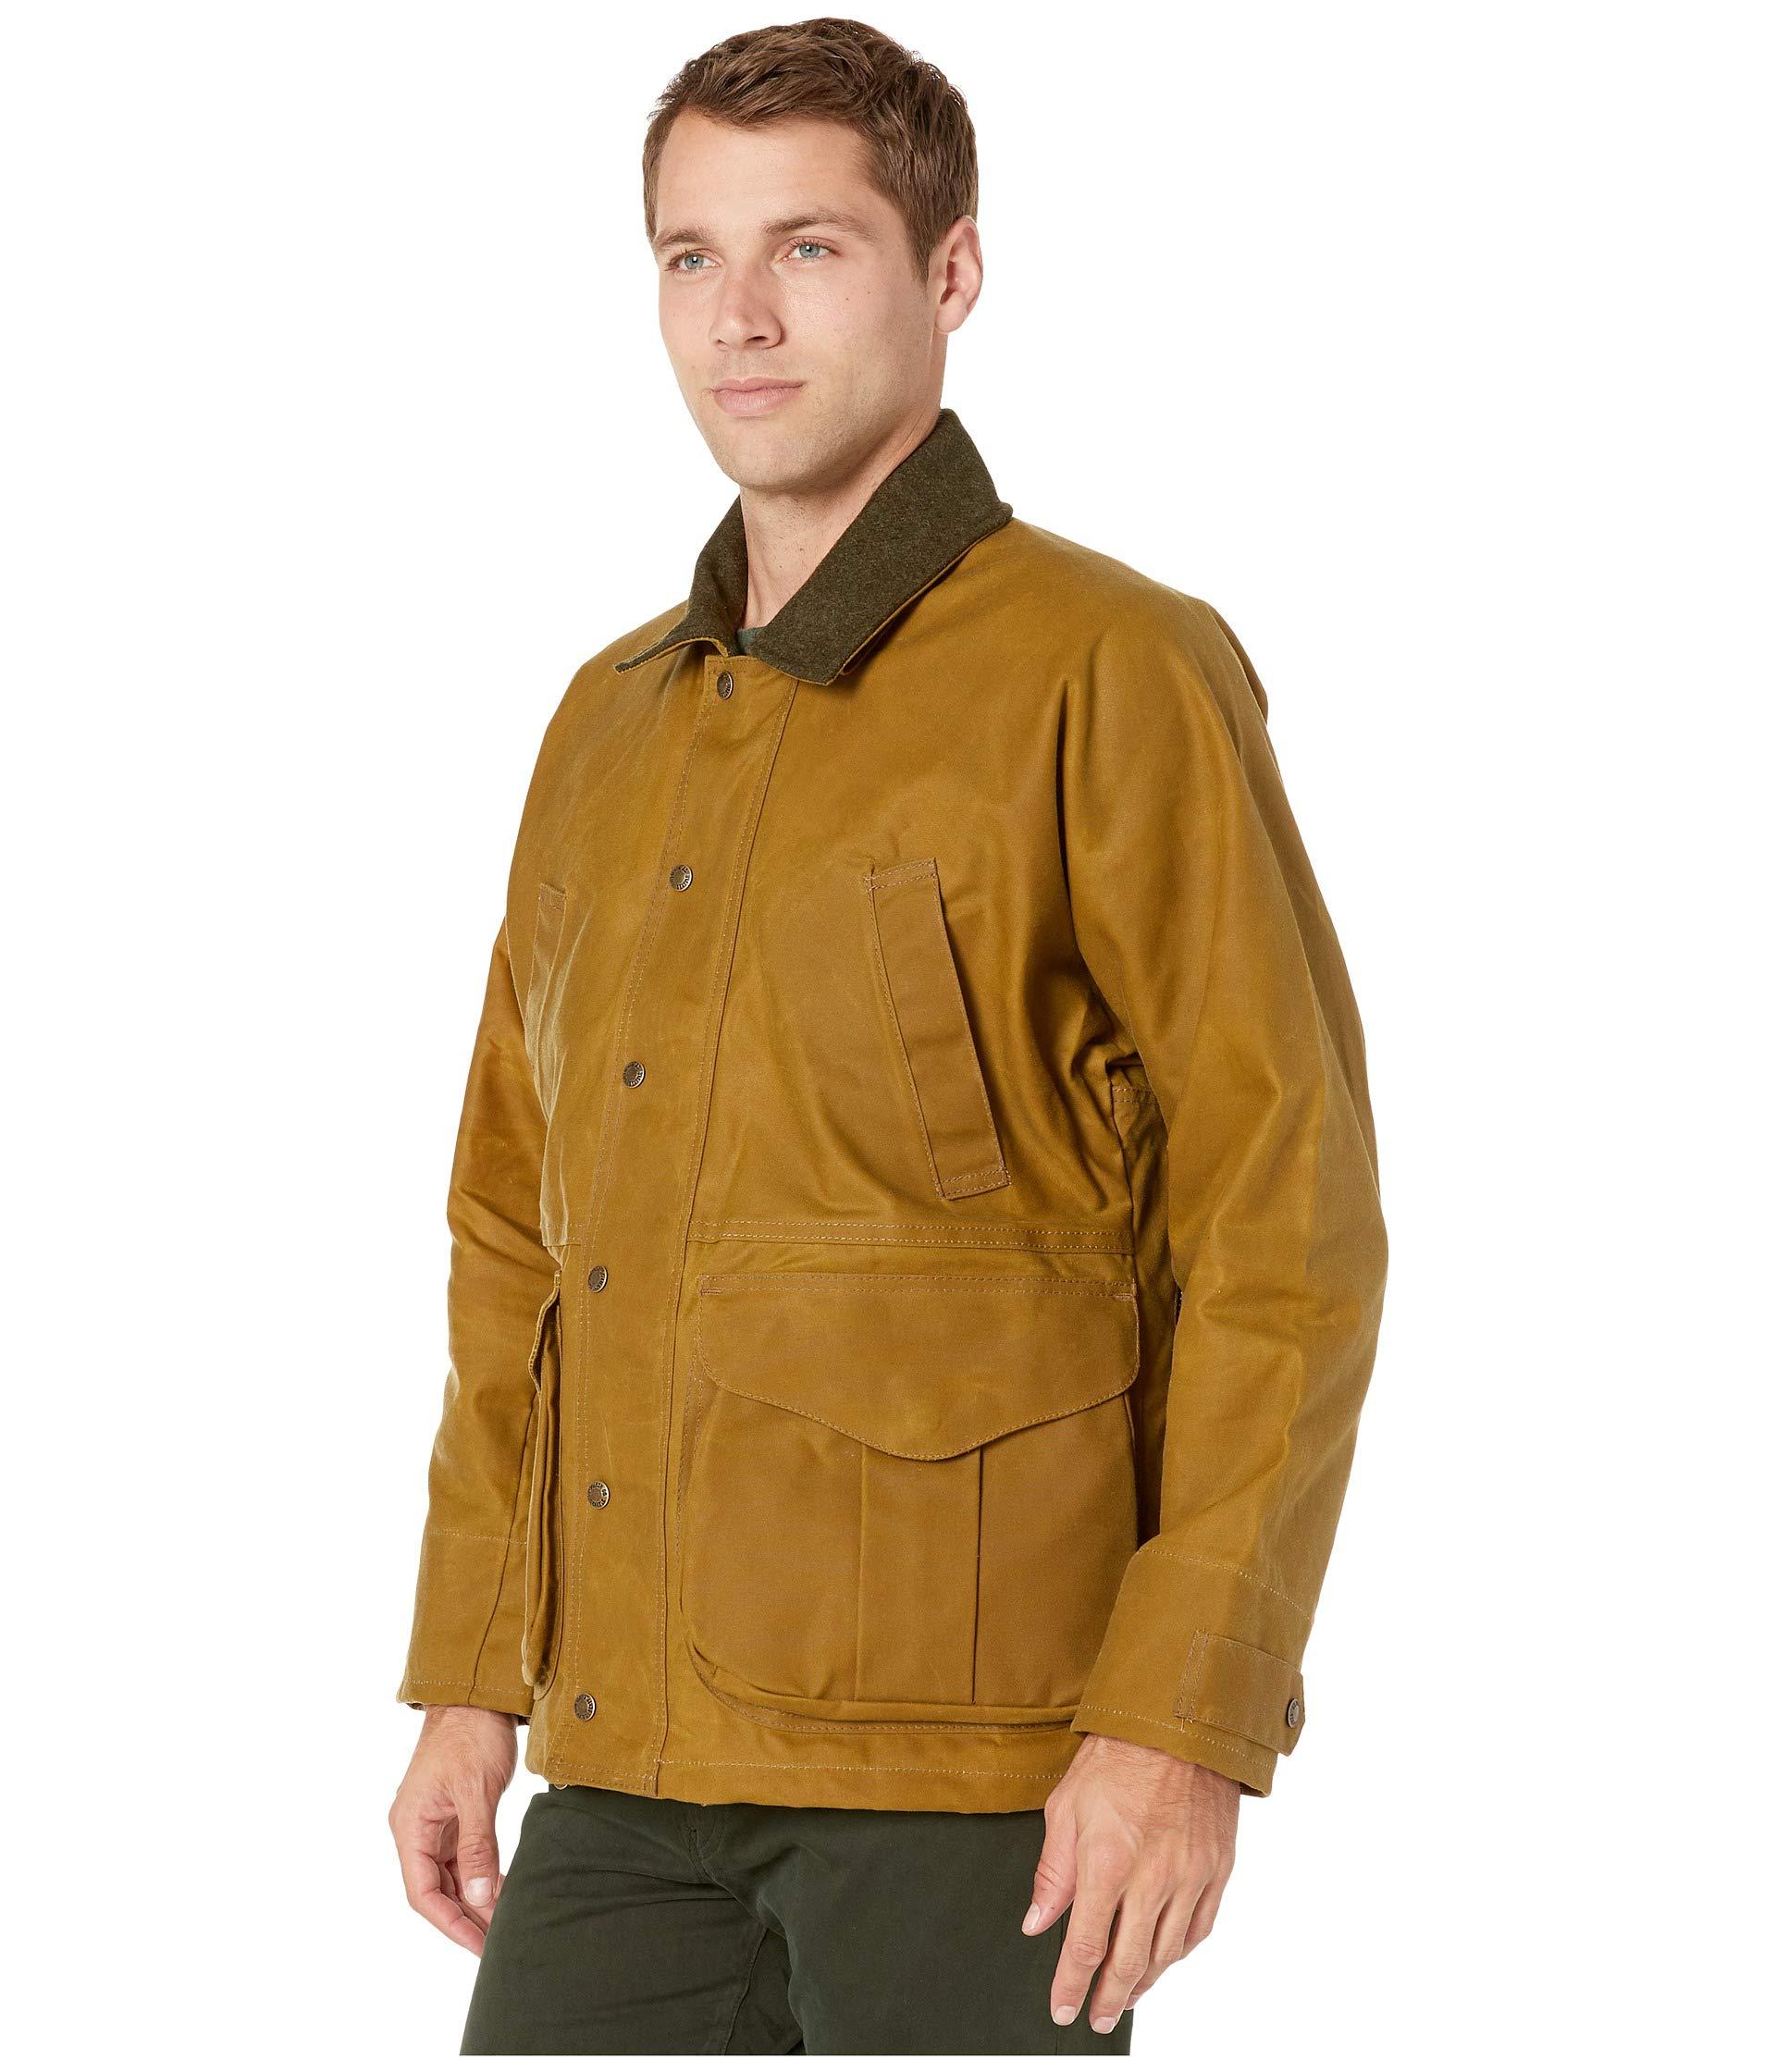 Filson Wool Tin Cloth Field Jacket in Tan (Brown) for Men - Lyst